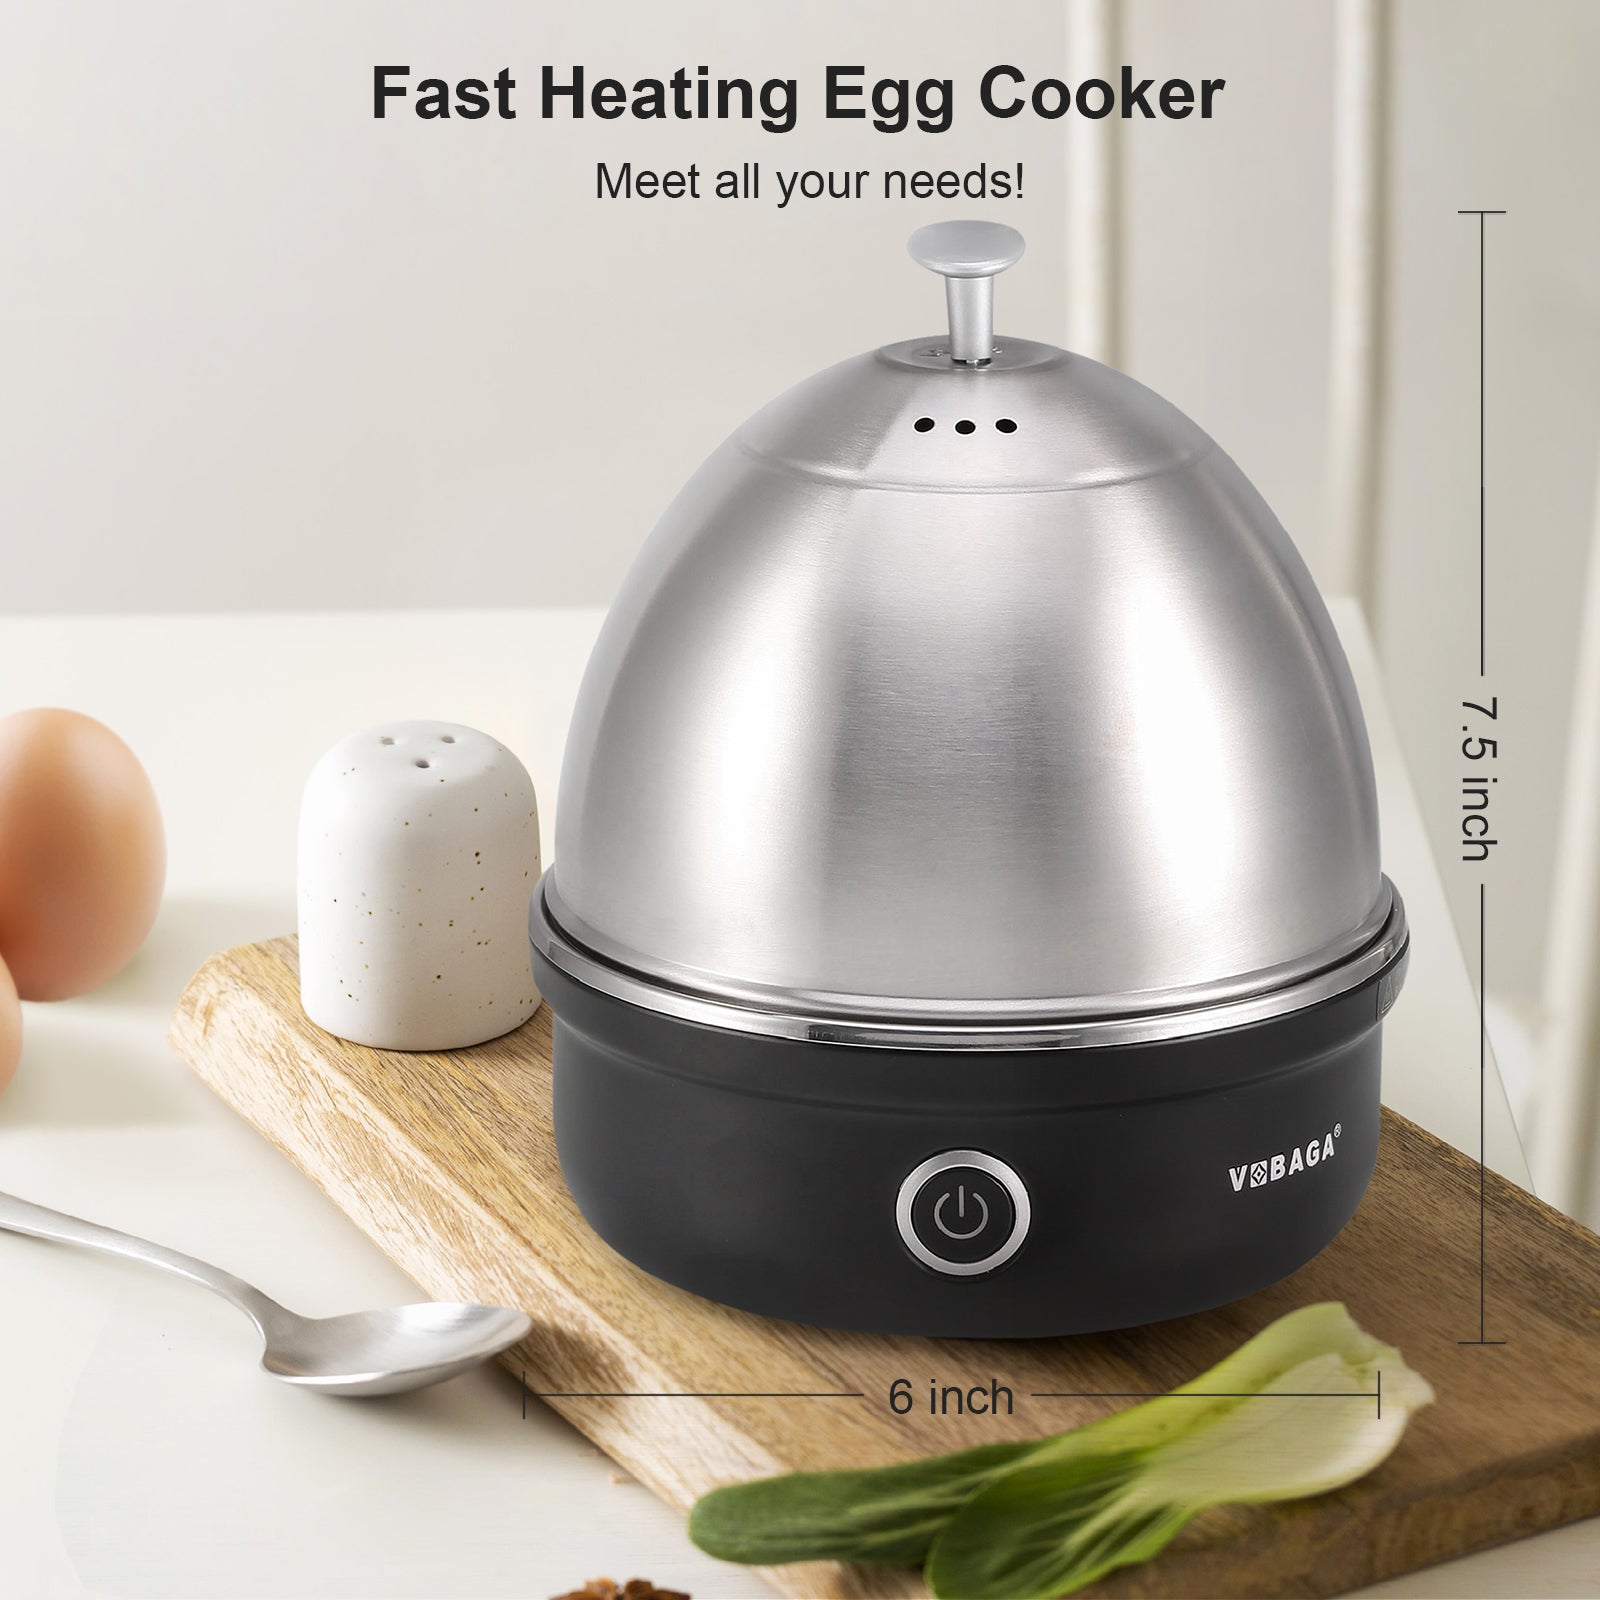 Best Buy: Chefman Electric Egg Cooker + Boiler, Quickly Makes 6